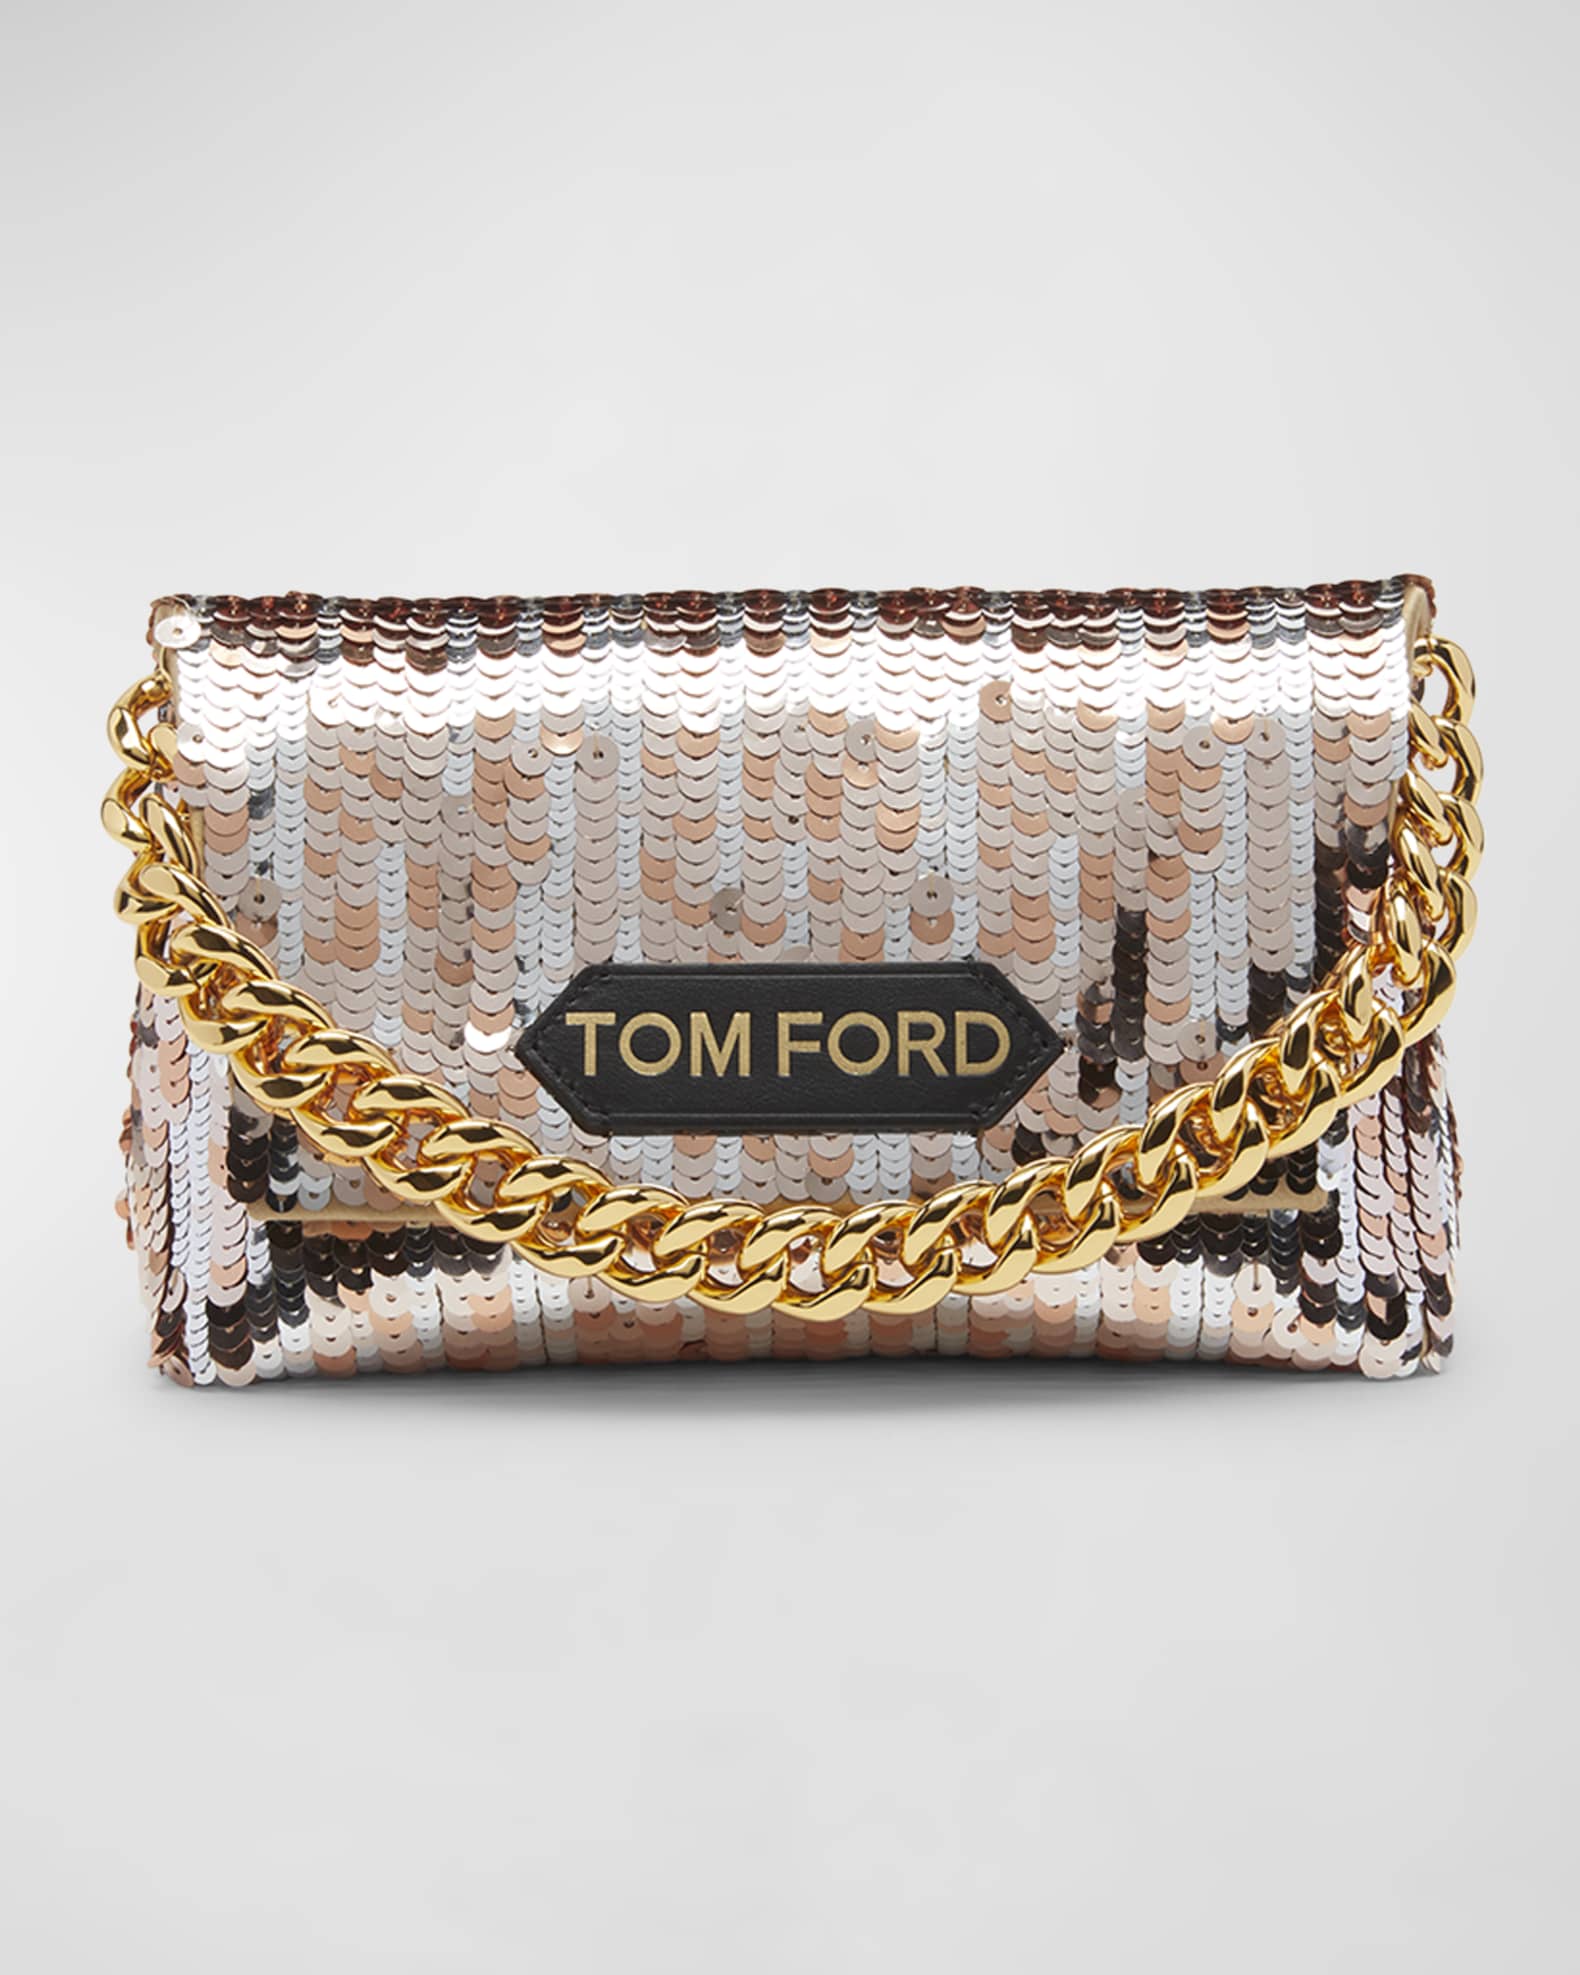 TOM FORD Natalia Python Chain Shoulder Bag - Bergdorf Goodman